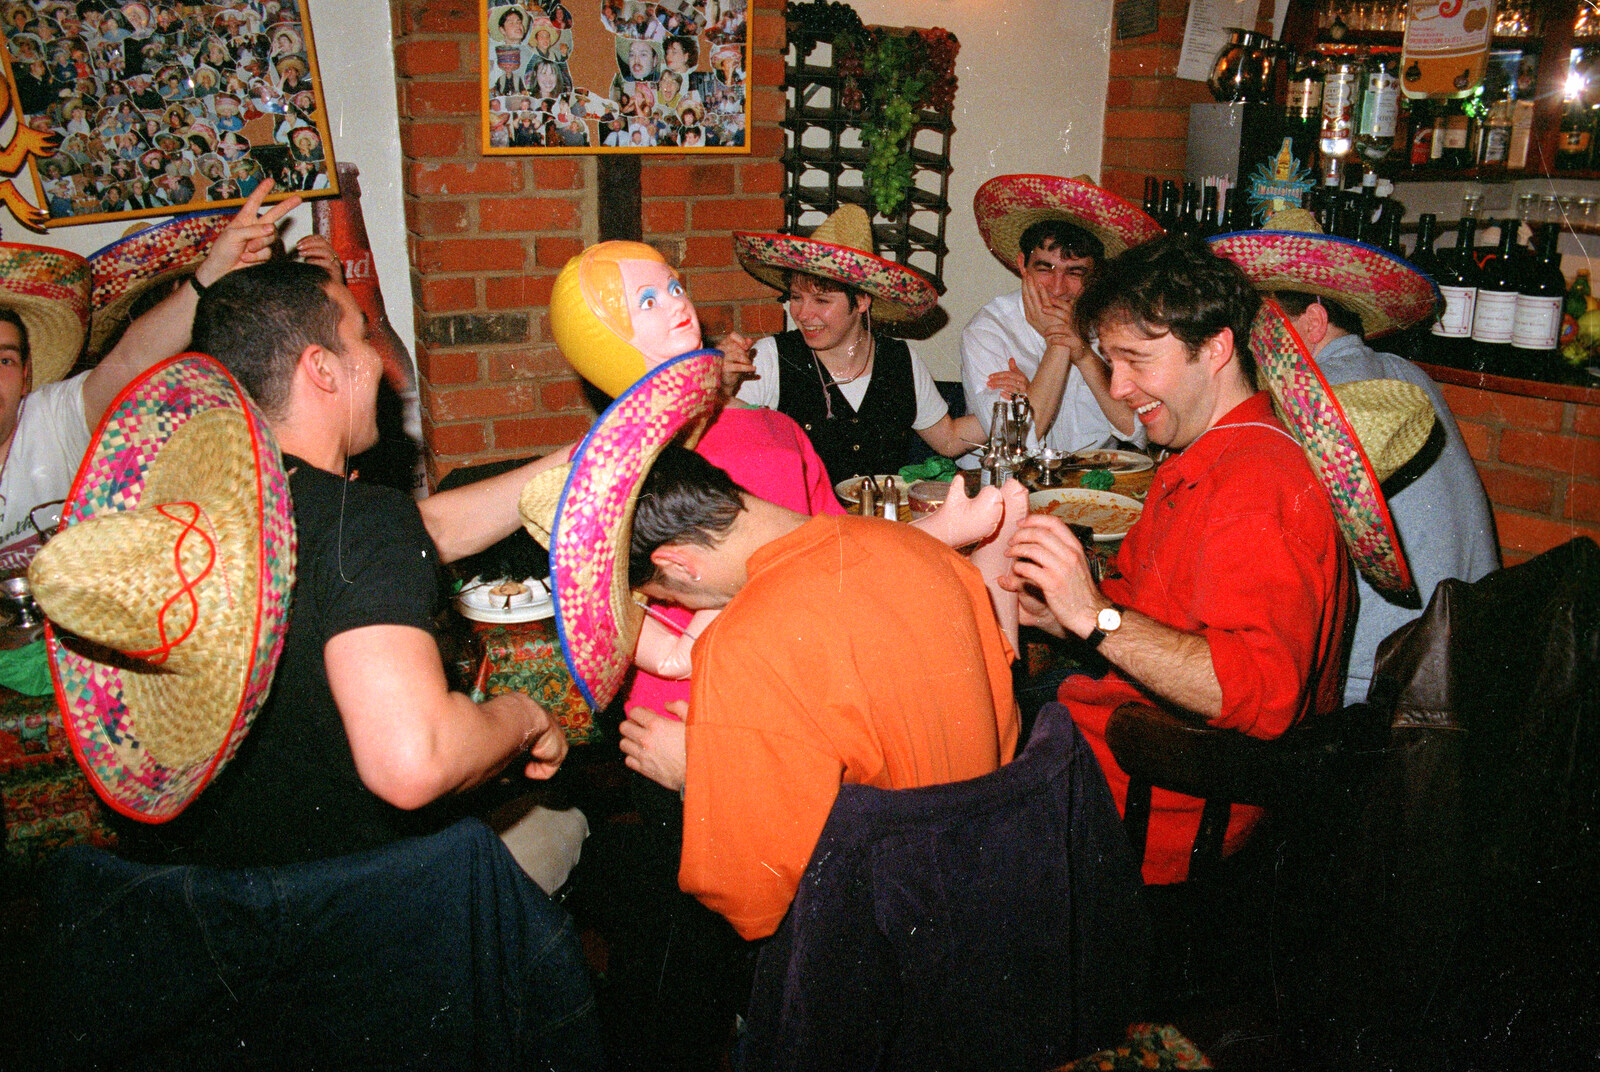 CISU, Los Mexicanos and the Inflatable Woman, Ipswich, Suffolk - 25th April 1996: The CISU table